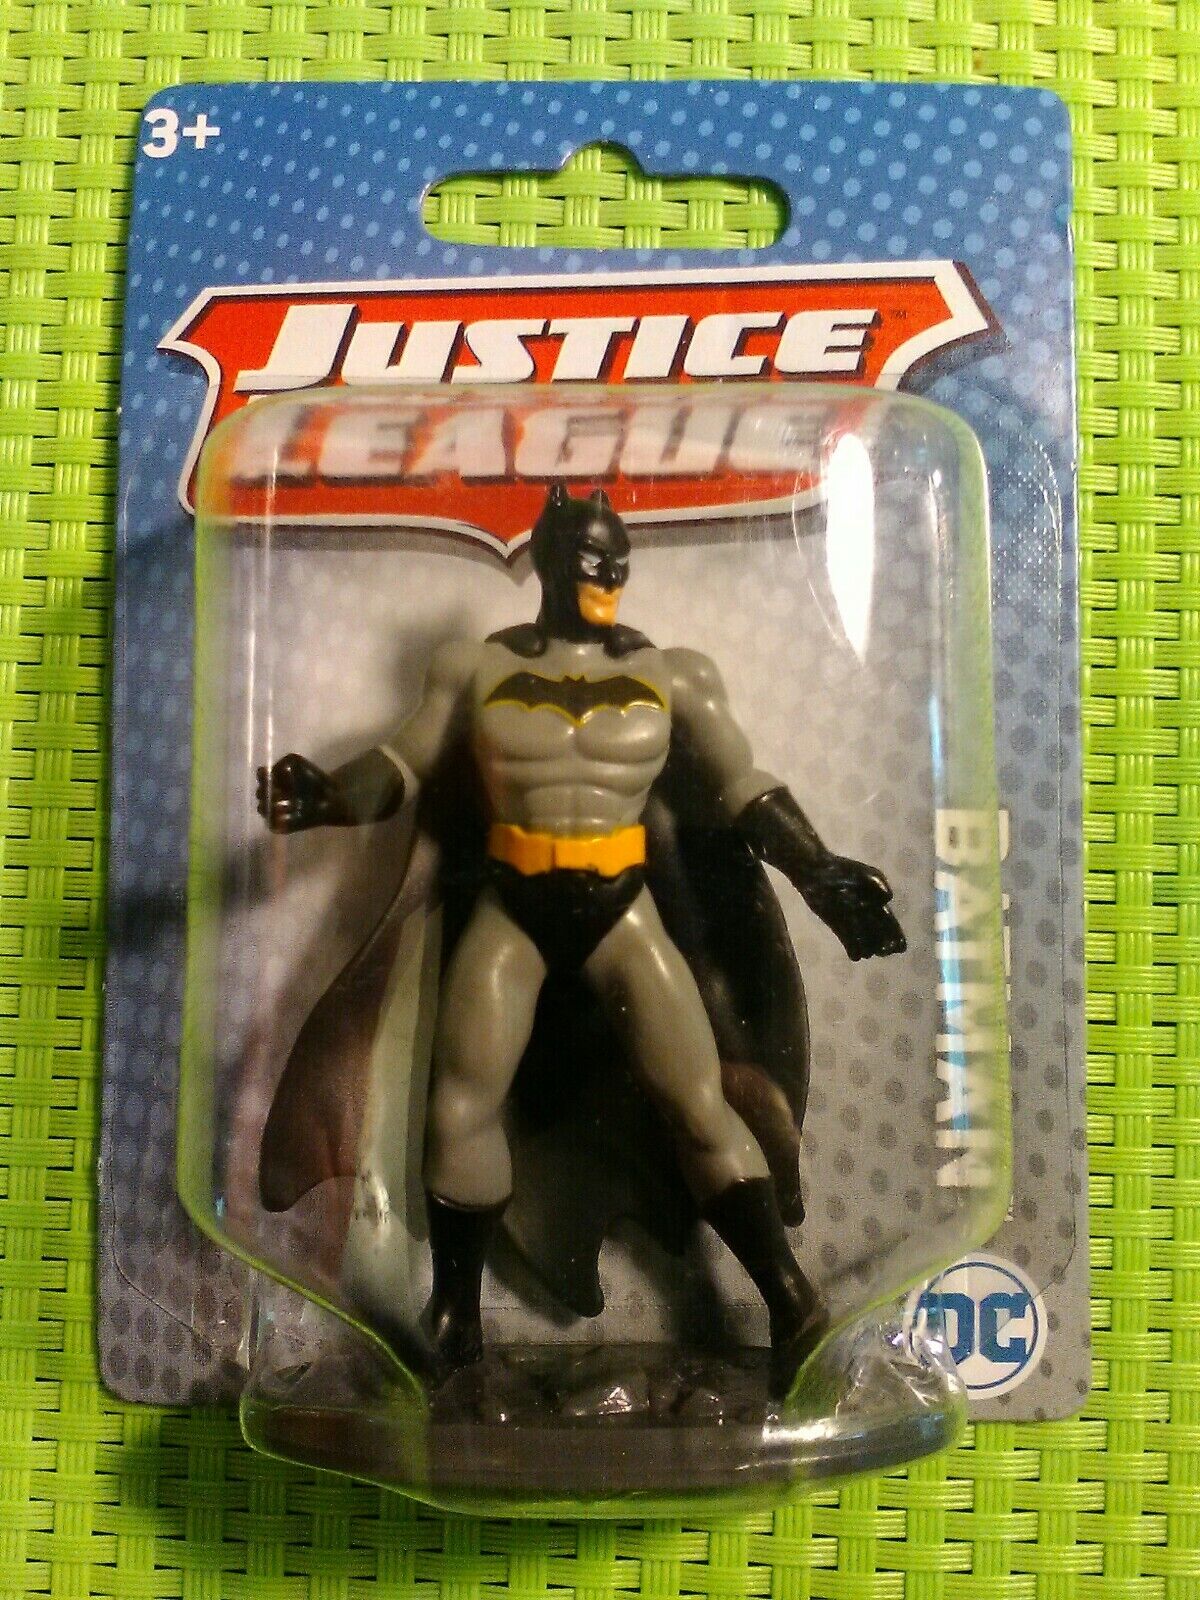 Justice League Batman Mini Figure Mattel New in Original Package